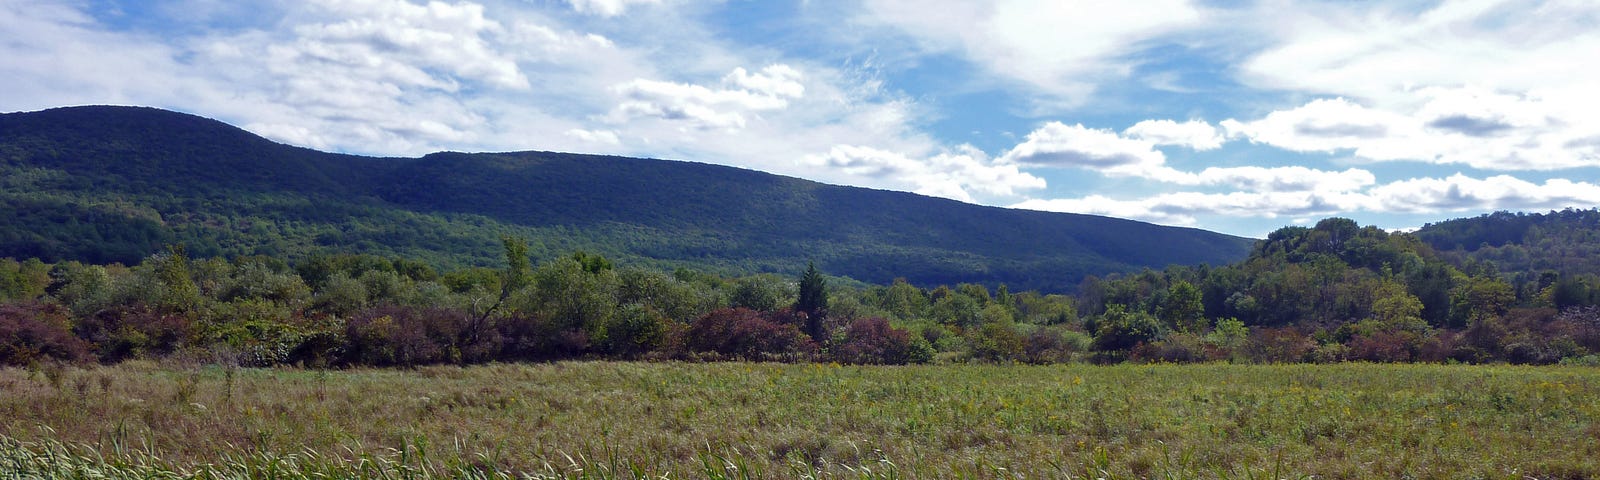 A grassland and mountainous landscape under a blue cloudy sky